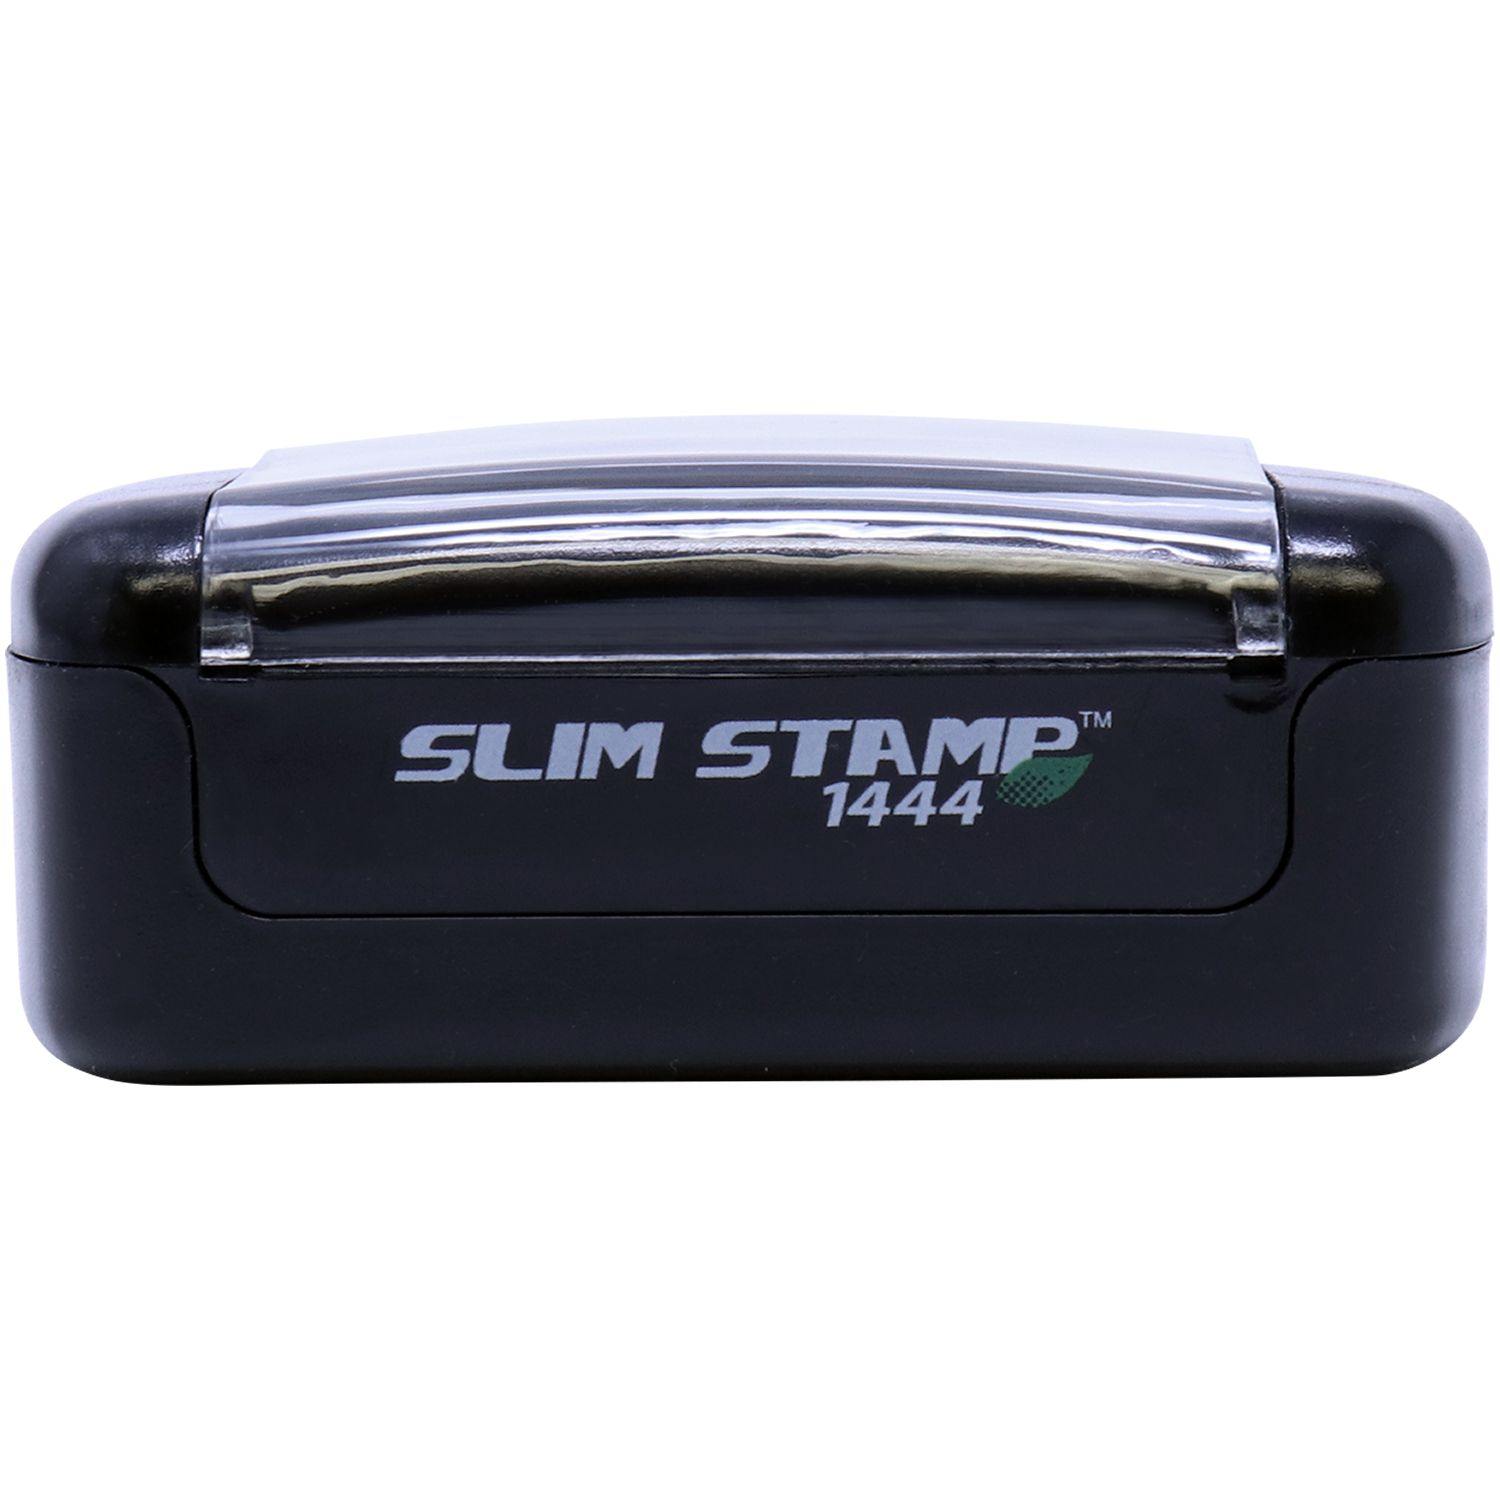 Alt View of Slim Pre-Inked Devolver Copia Stamp Front View